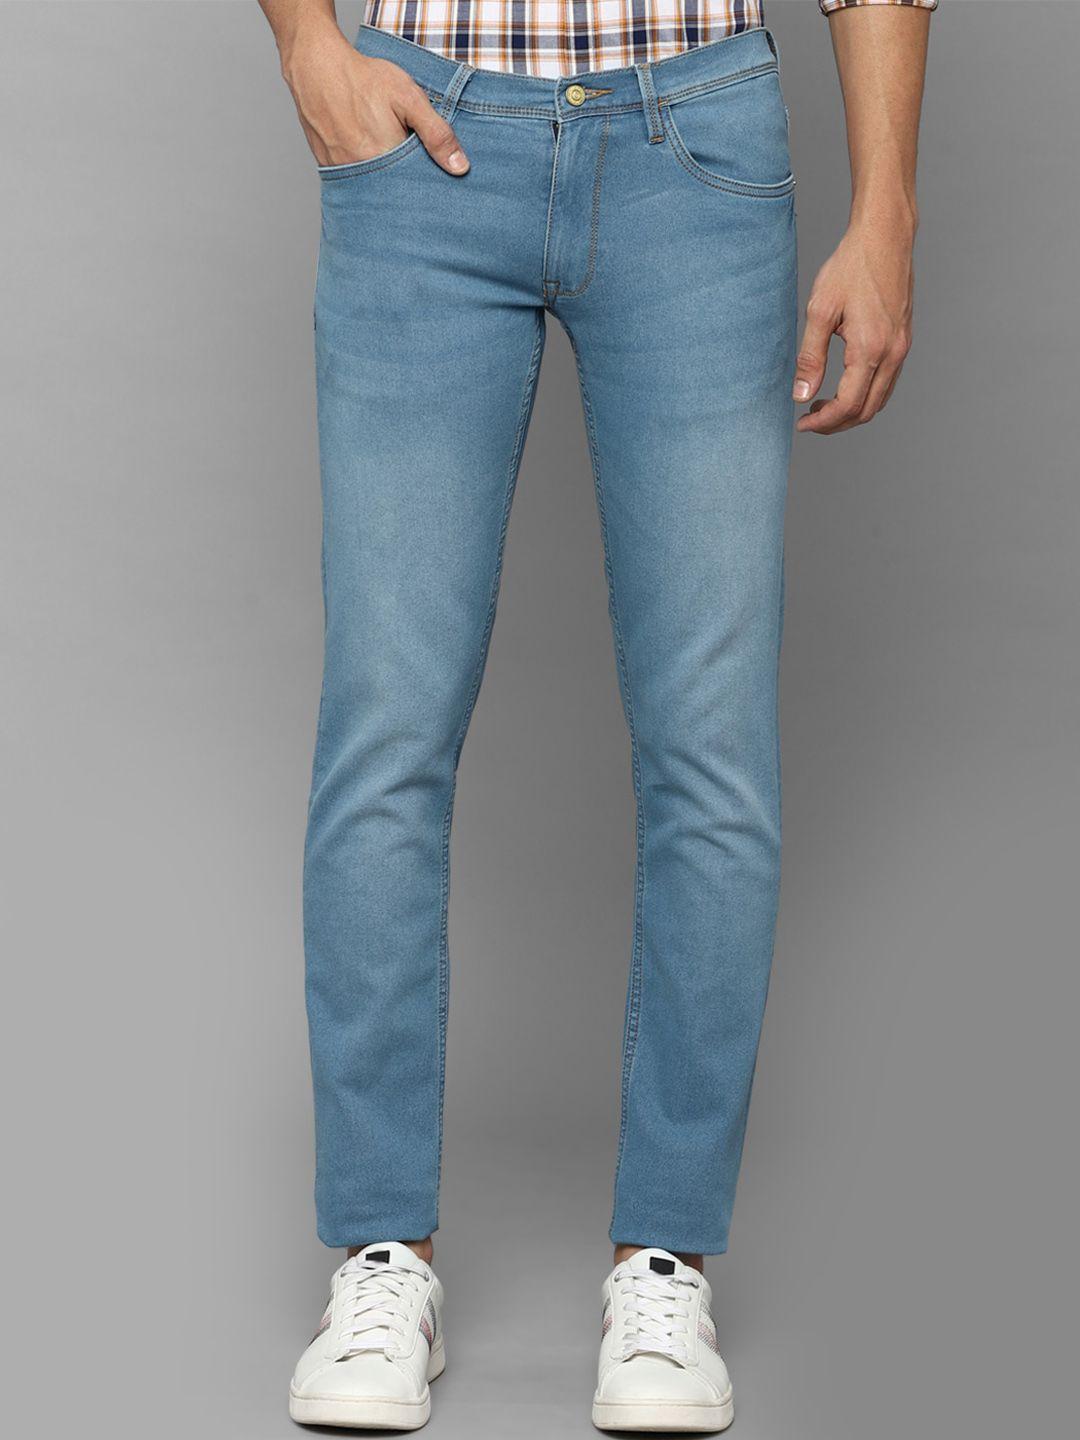 Allen Solly Men Blue Skinny Fit Light Fade Cotton Jeans